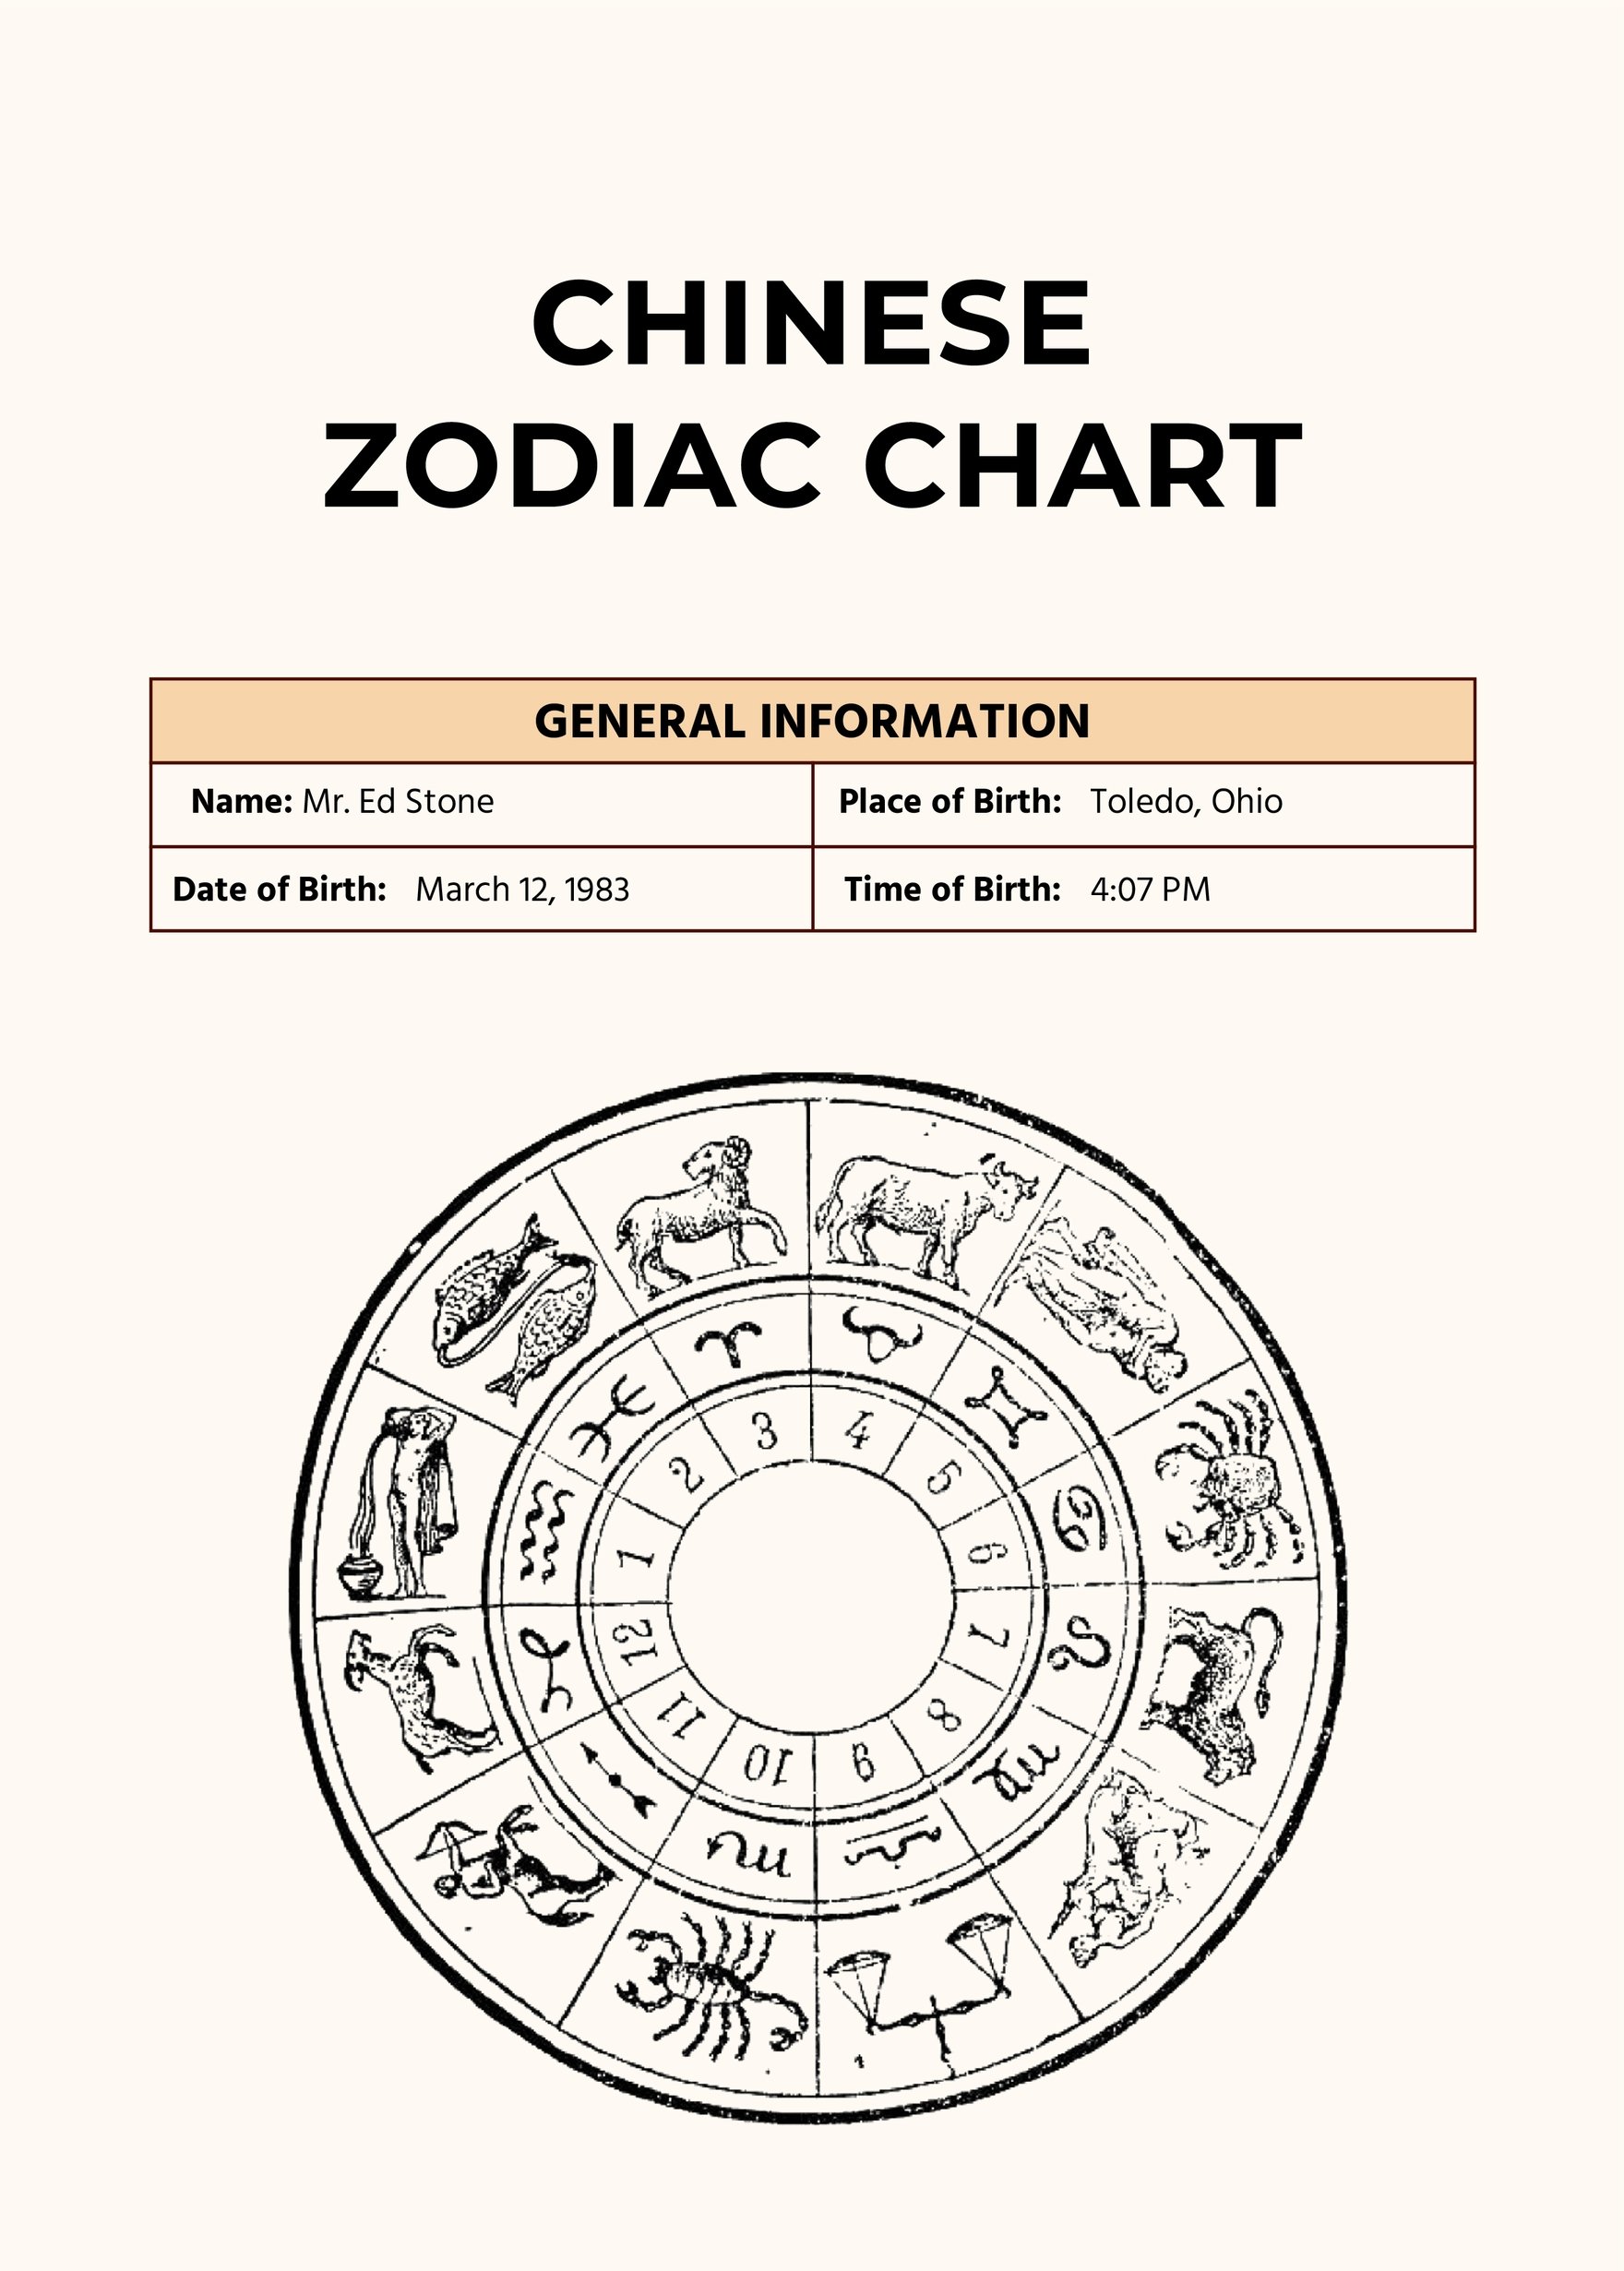 Chinese Zodiac Chart Template in PDF, Illustrator